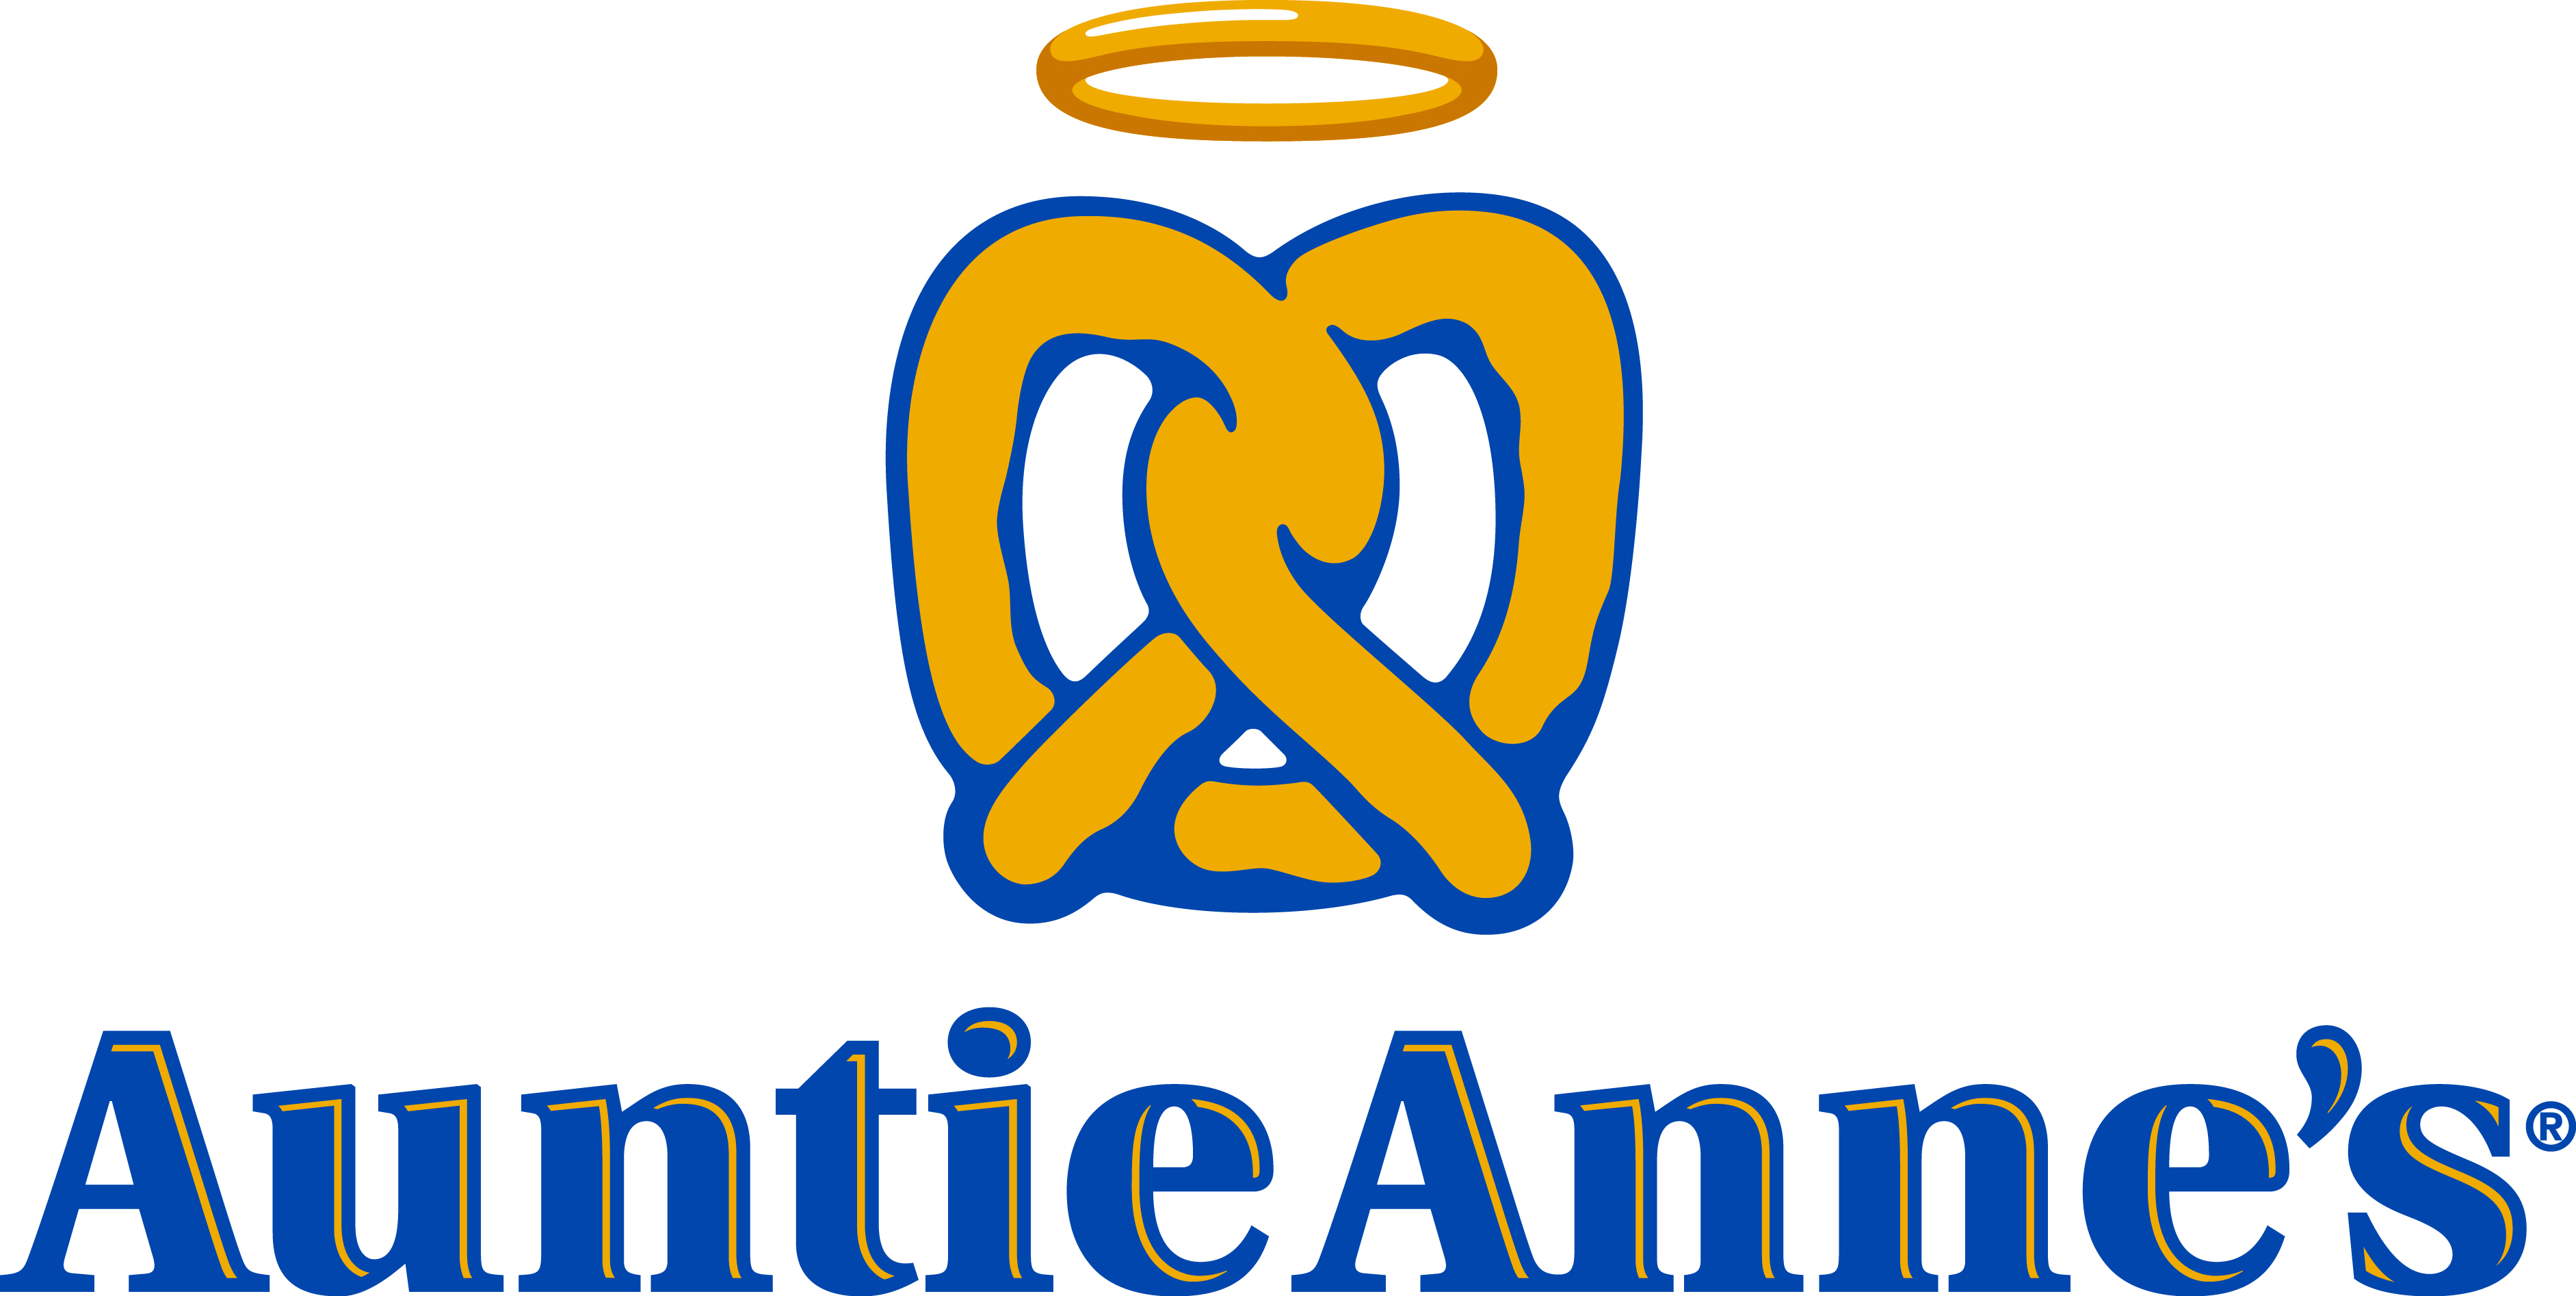 Auntie Anne's Franchise